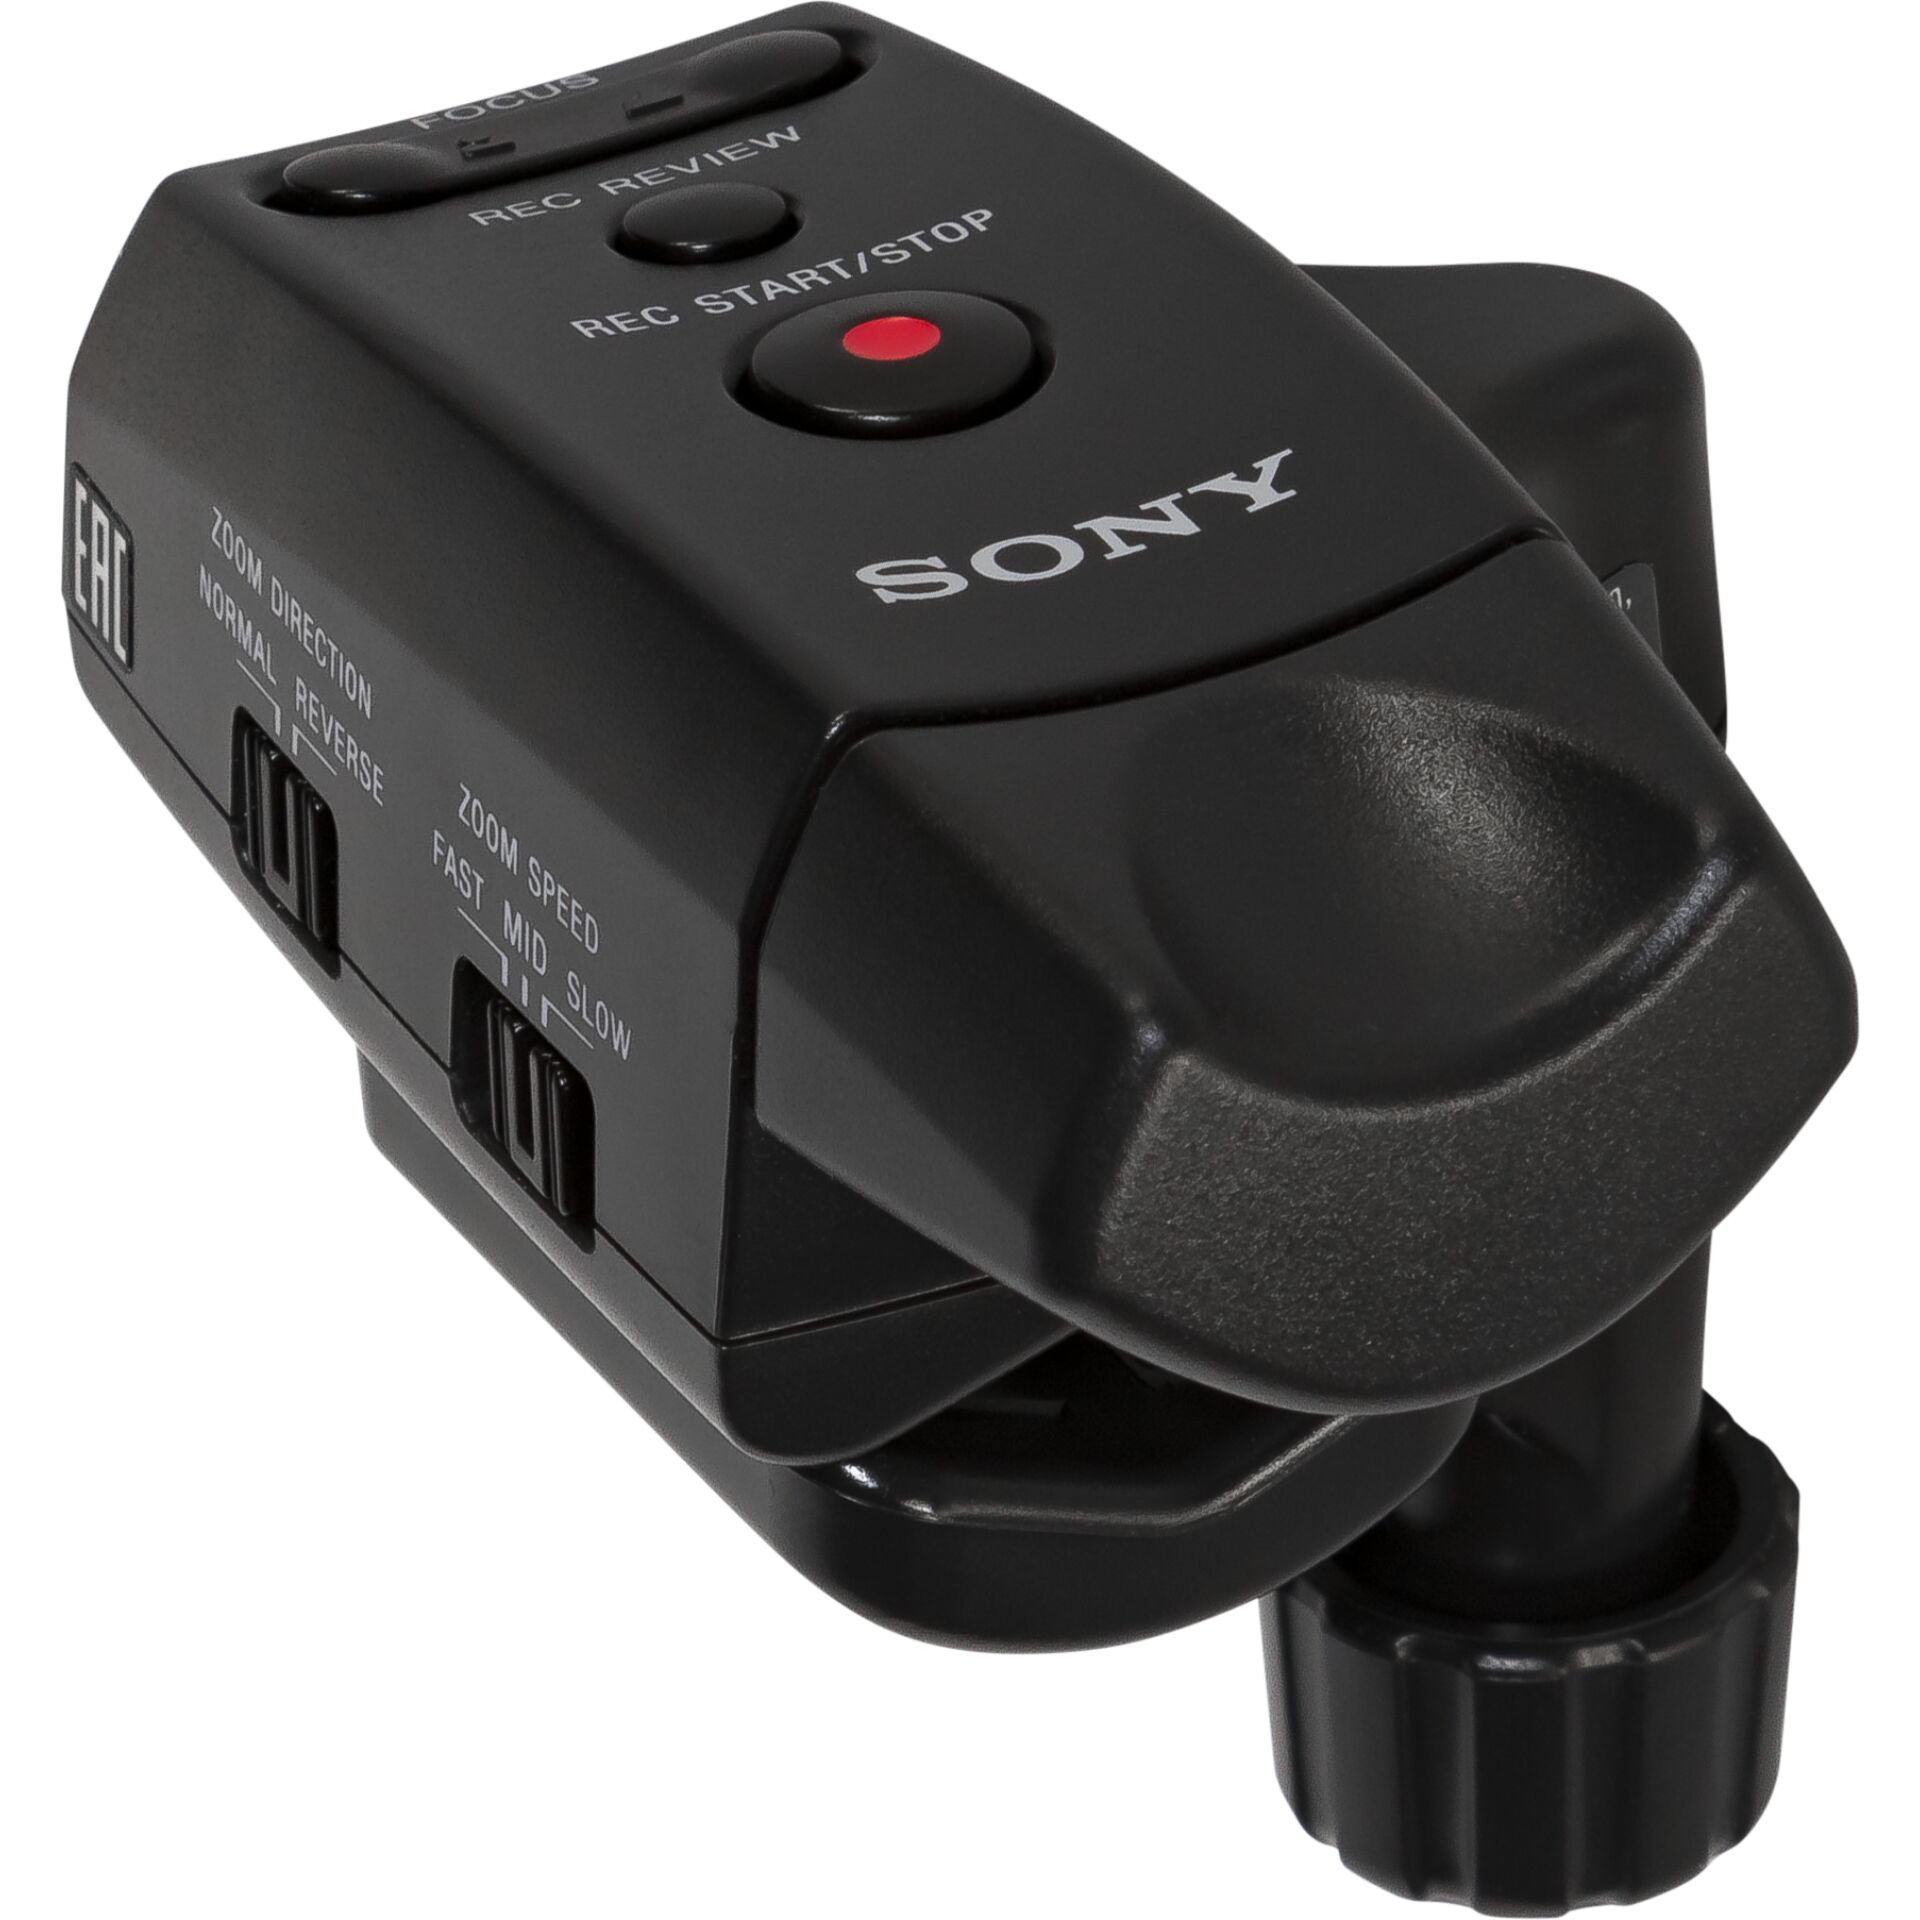 Sony RM-1BP remote control